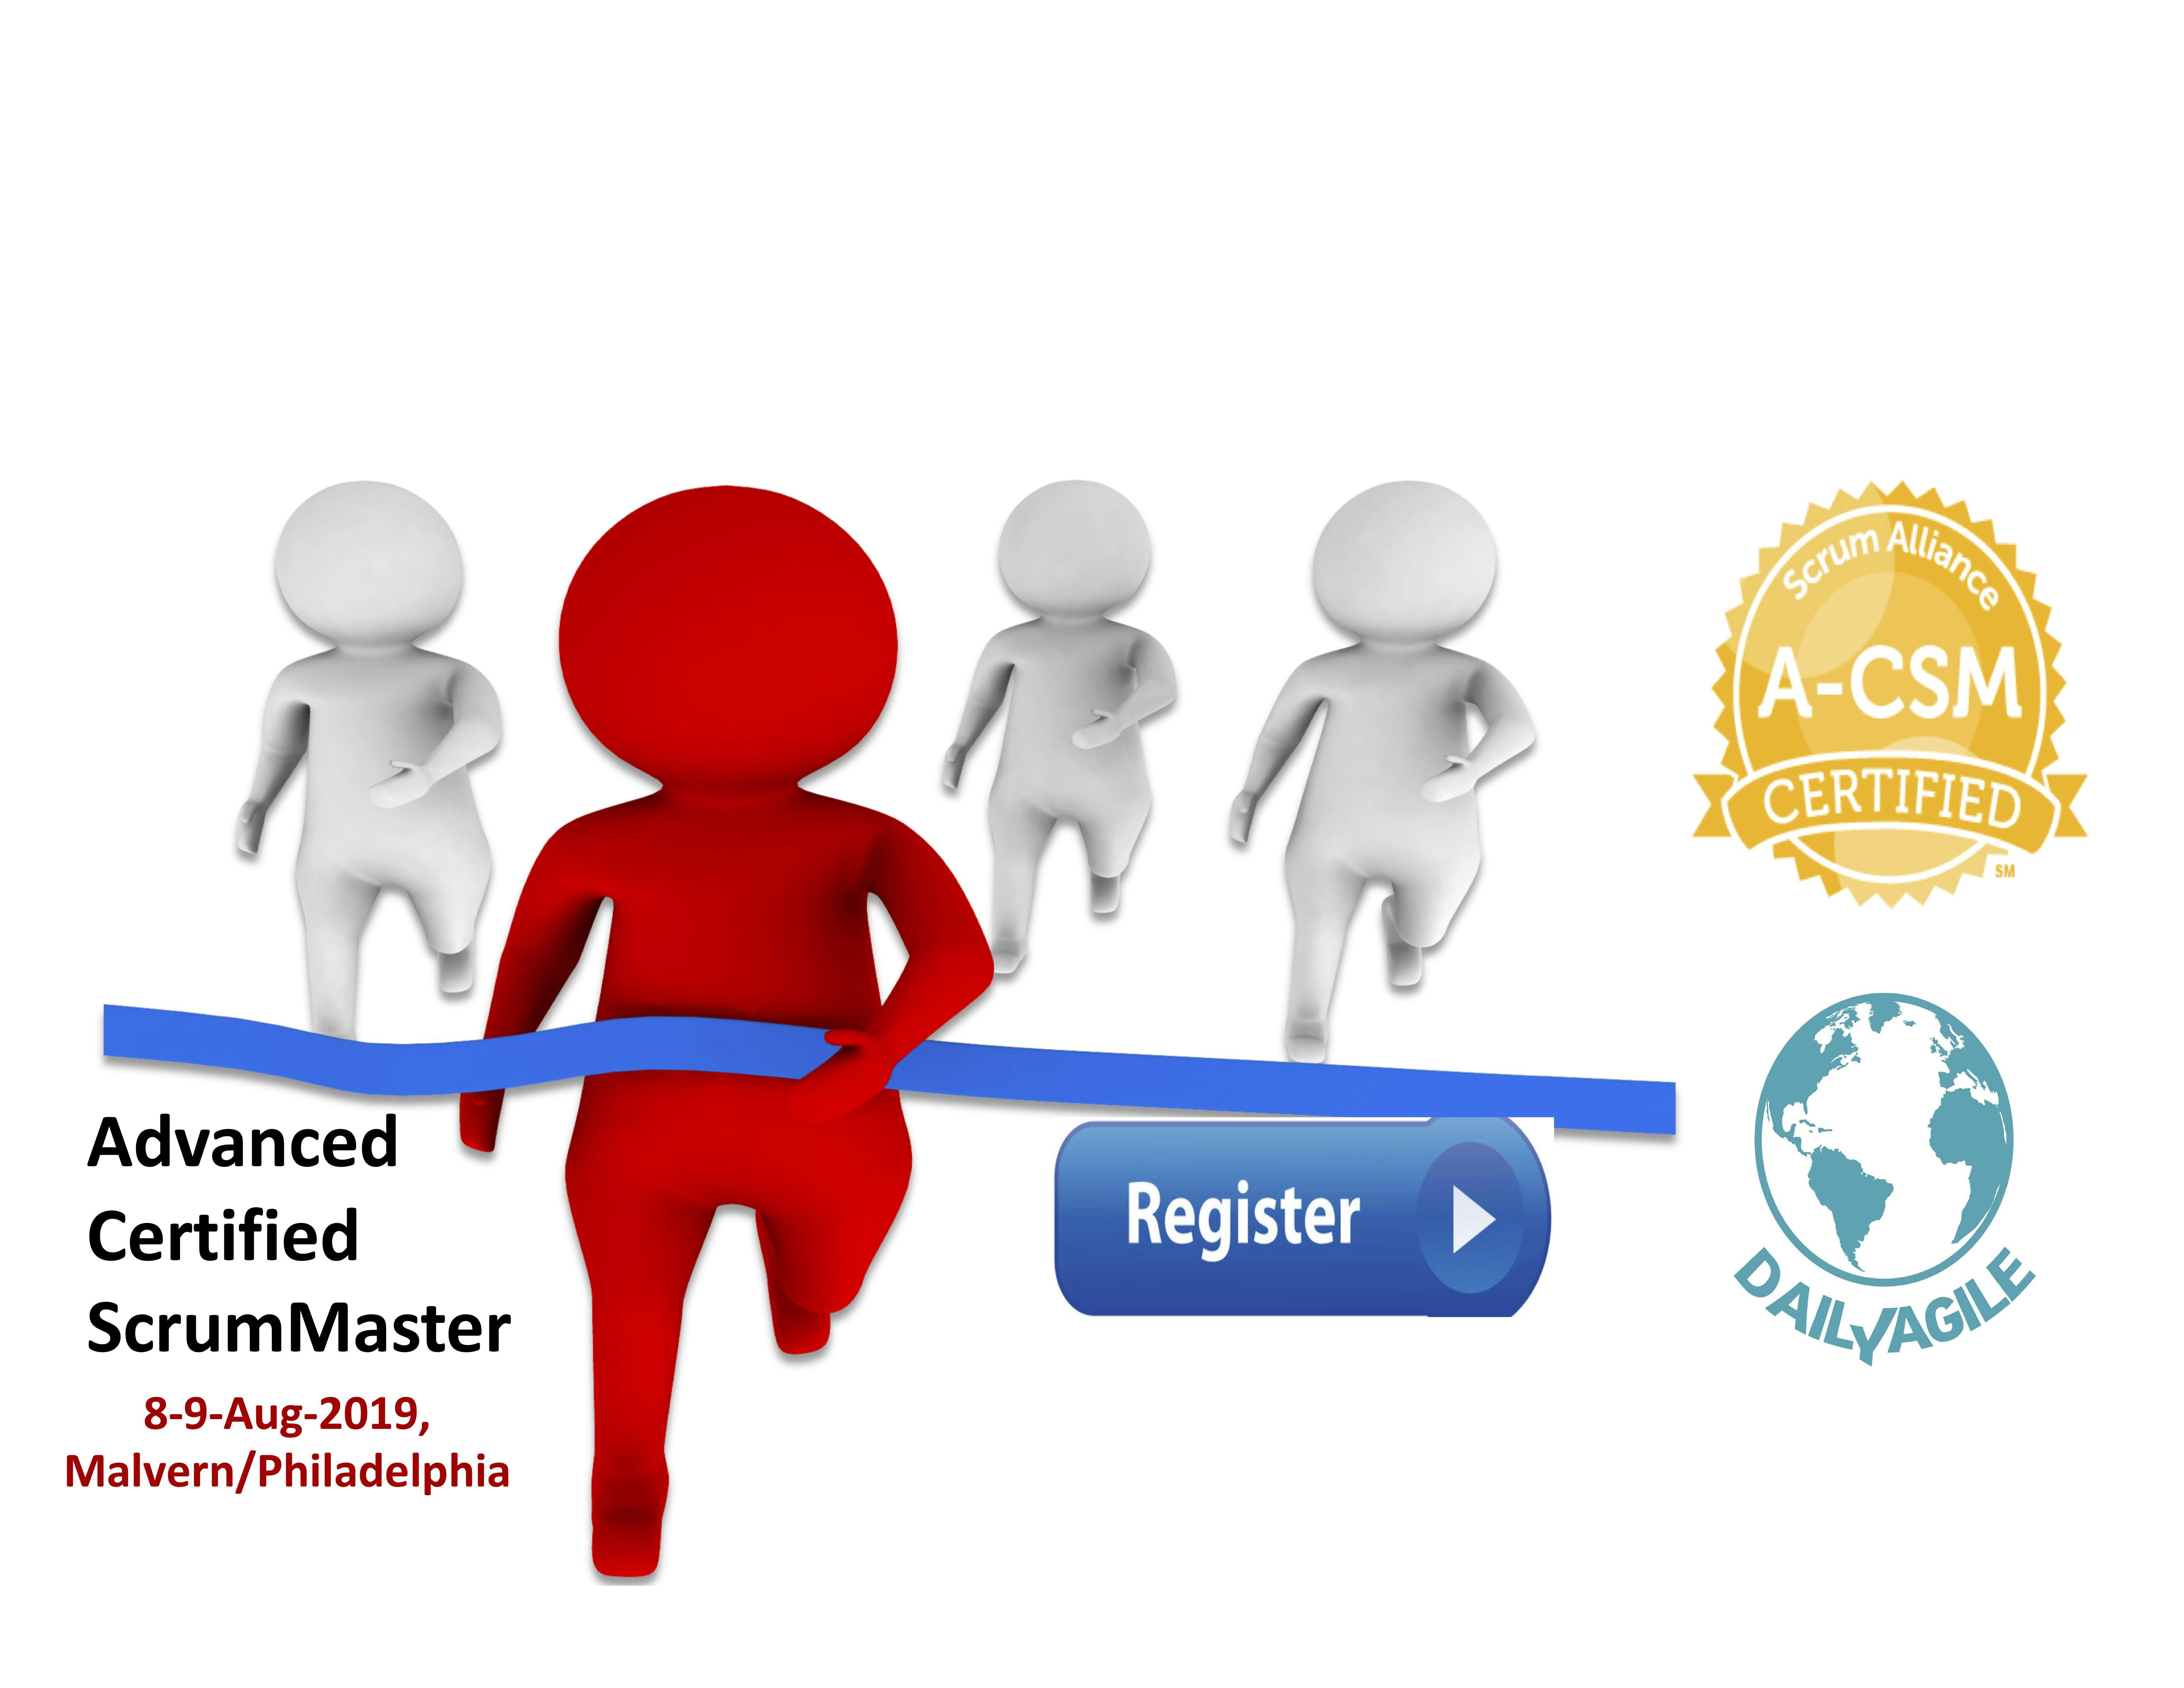 Advanced Certified Scrum Master (A-CSM) in Malvern/Philadelphia, PA